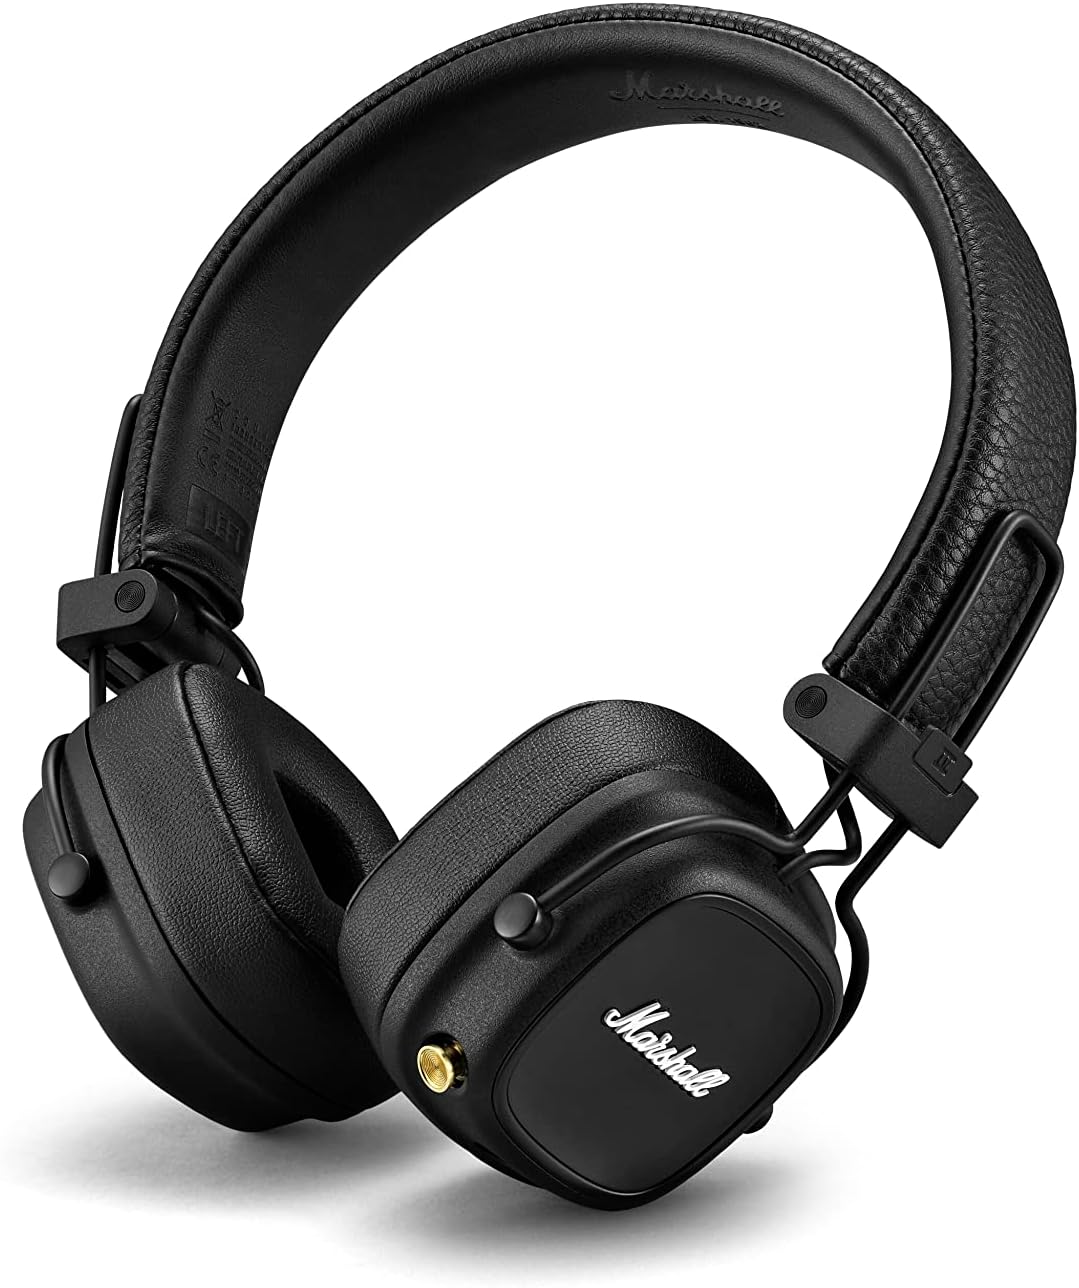 Marshall Major IV Wireless Over-Ear Bluetooth Headphones